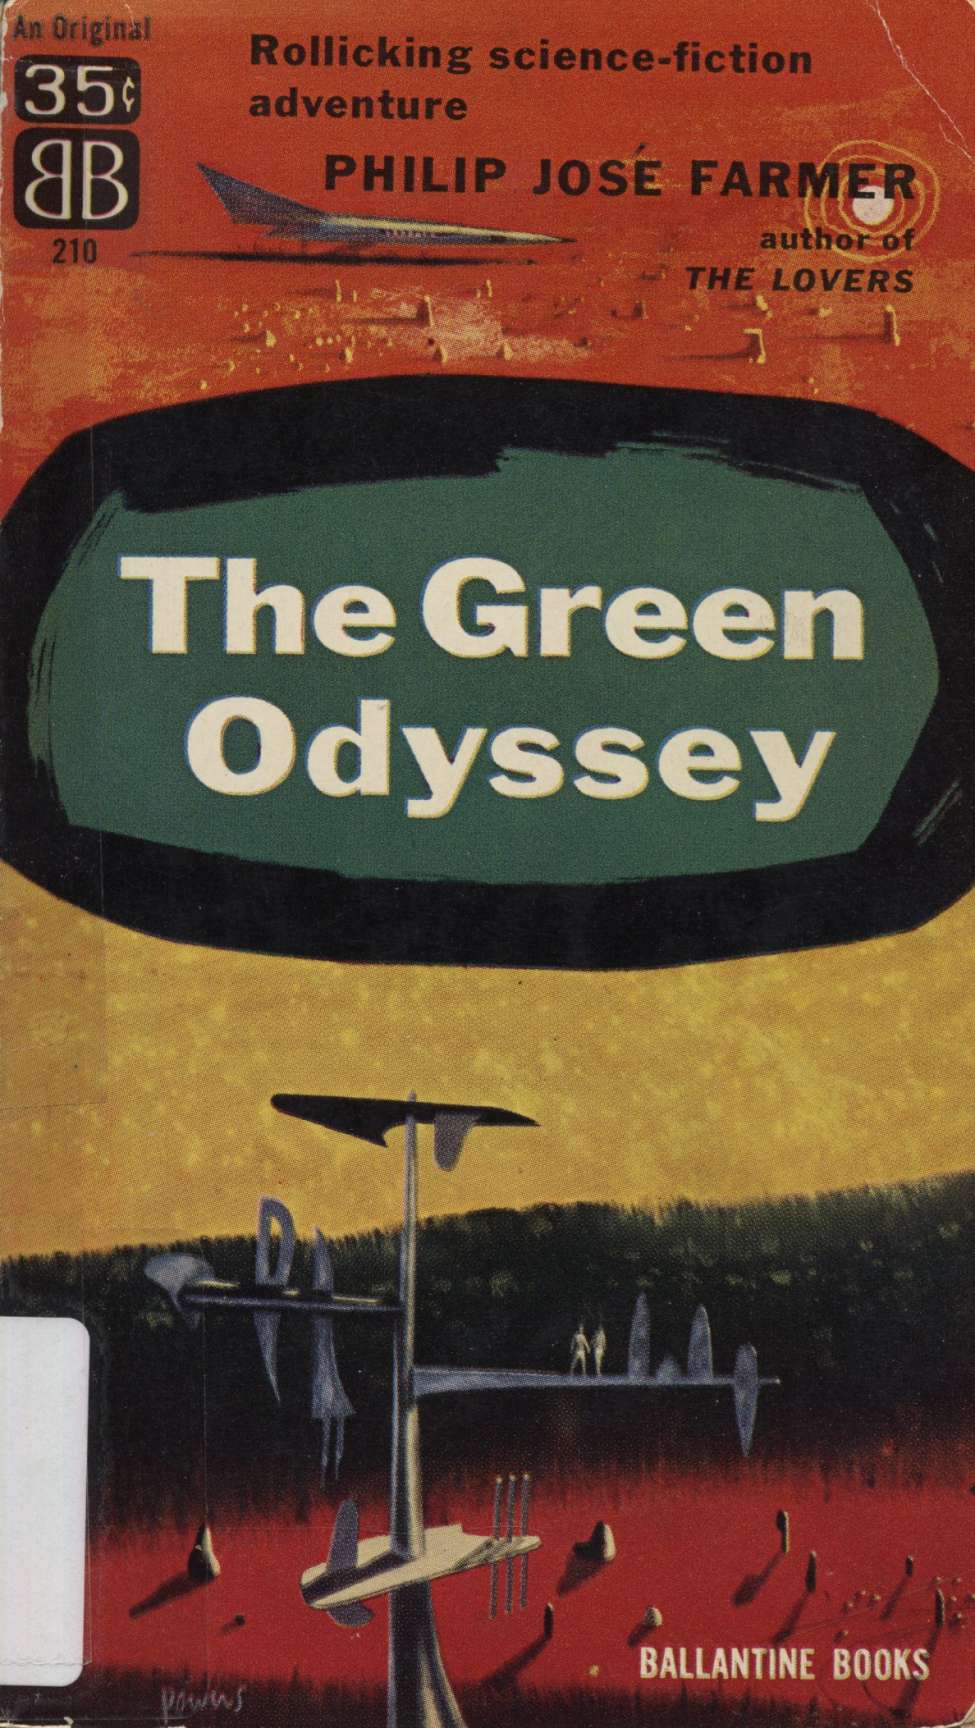 Comic Book Cover For The Green Odyssey - Philip José Farmer